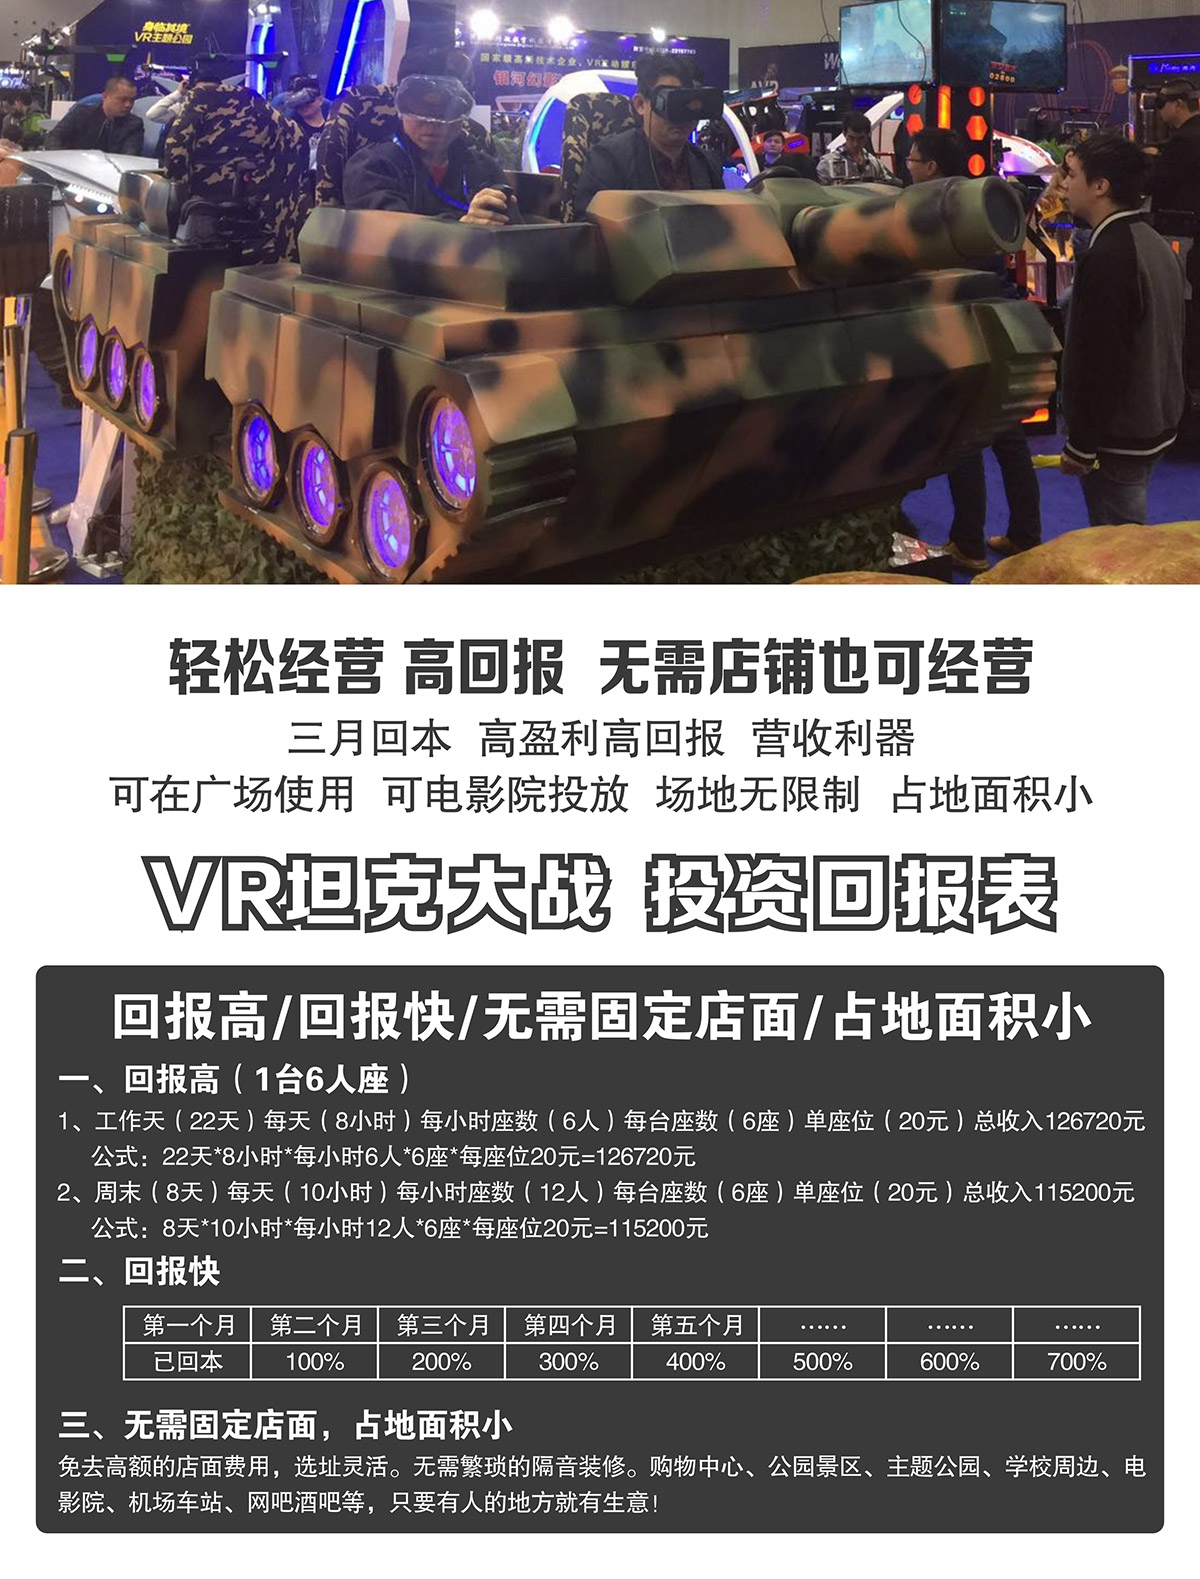 VR坦克大战投资回报表.jpg